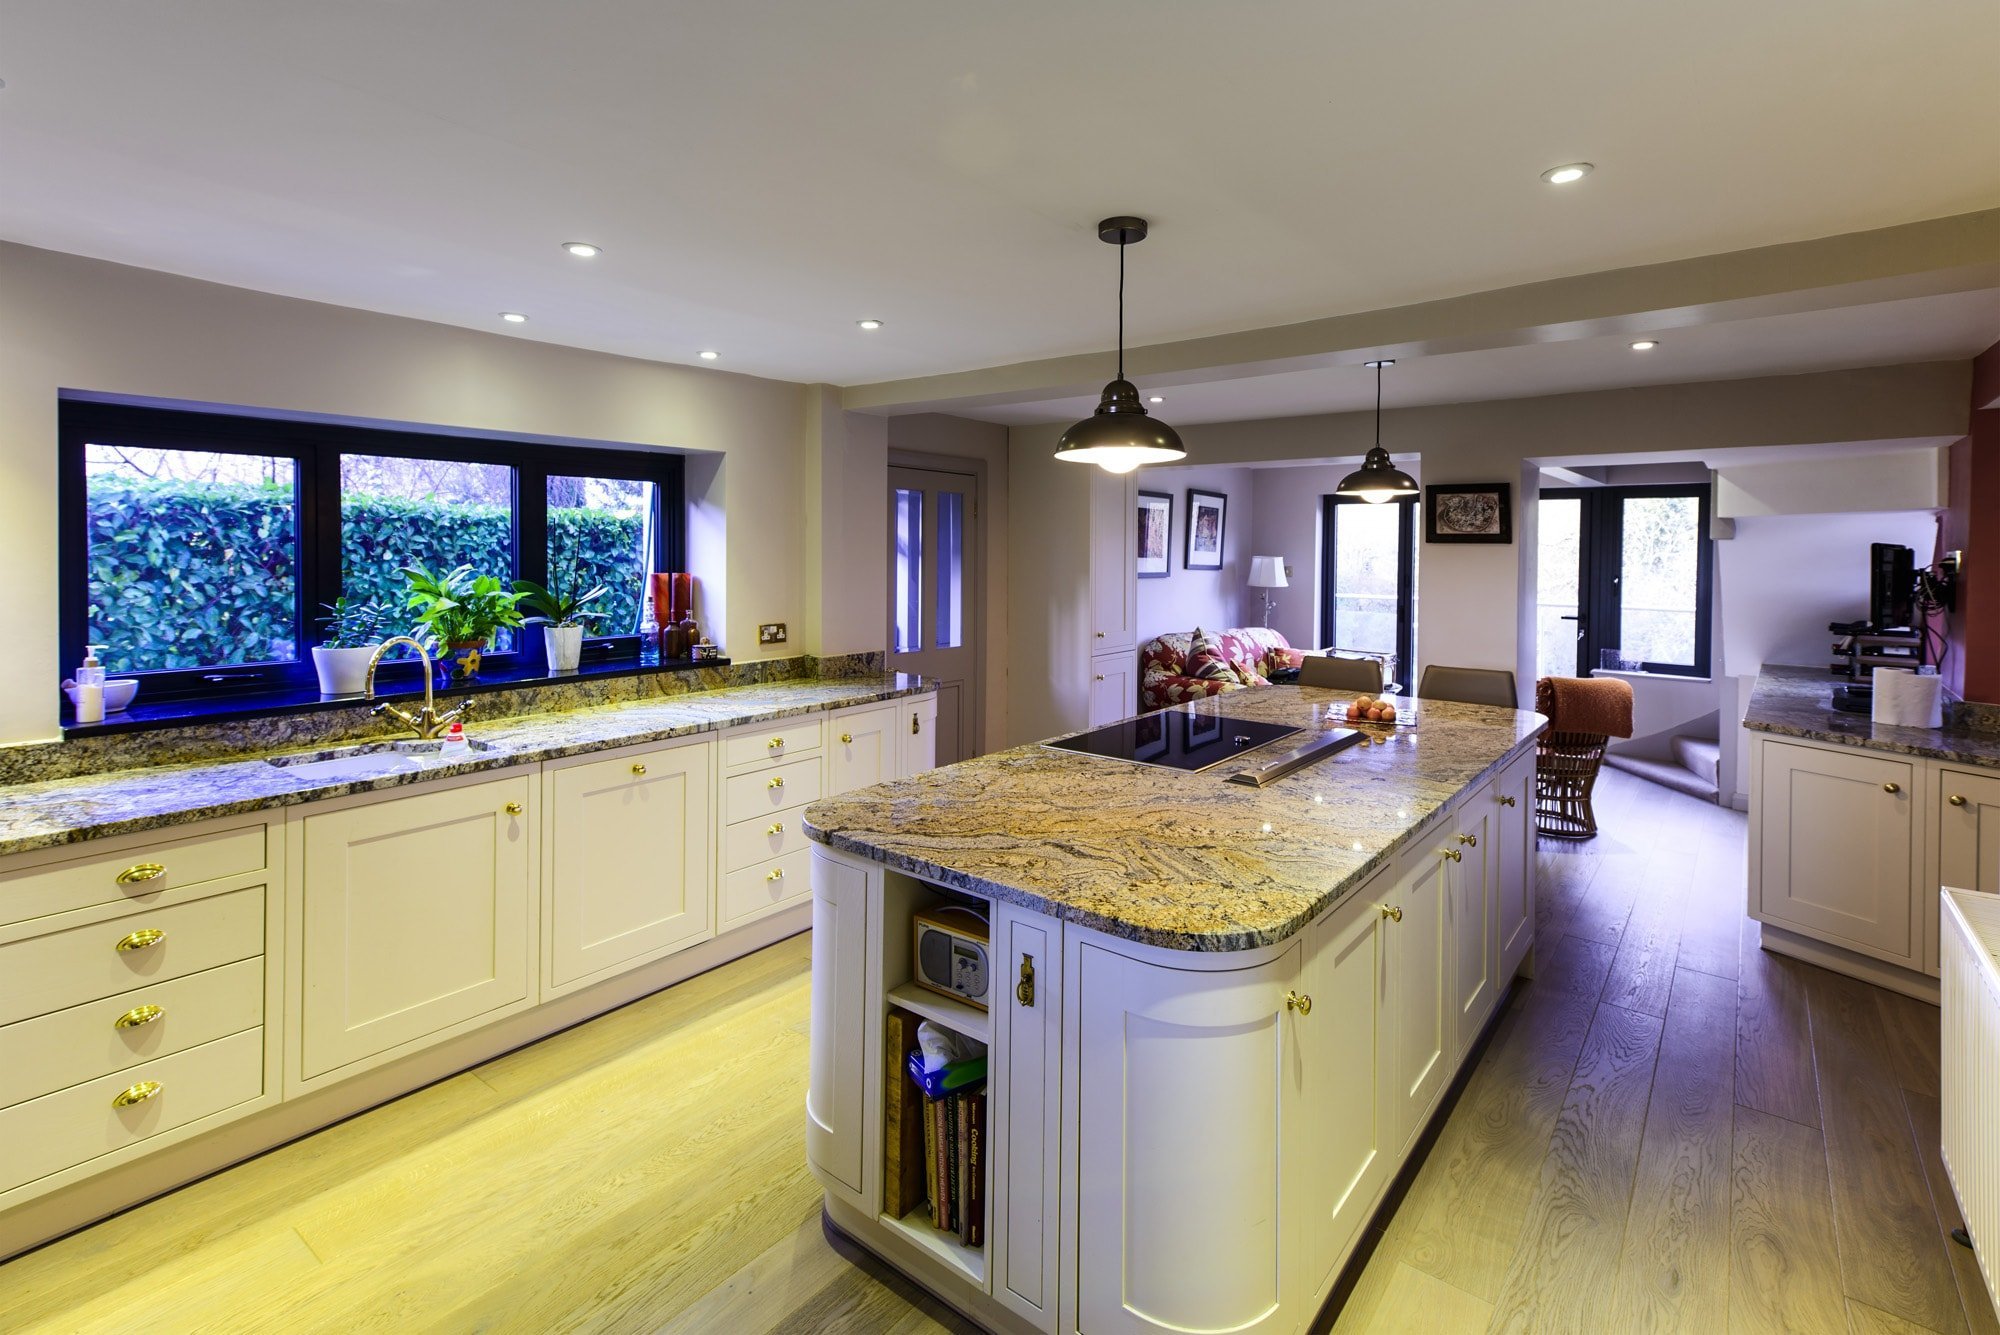 paisley-gold-granite-betchworth-surrey-15274006-kitchen-min